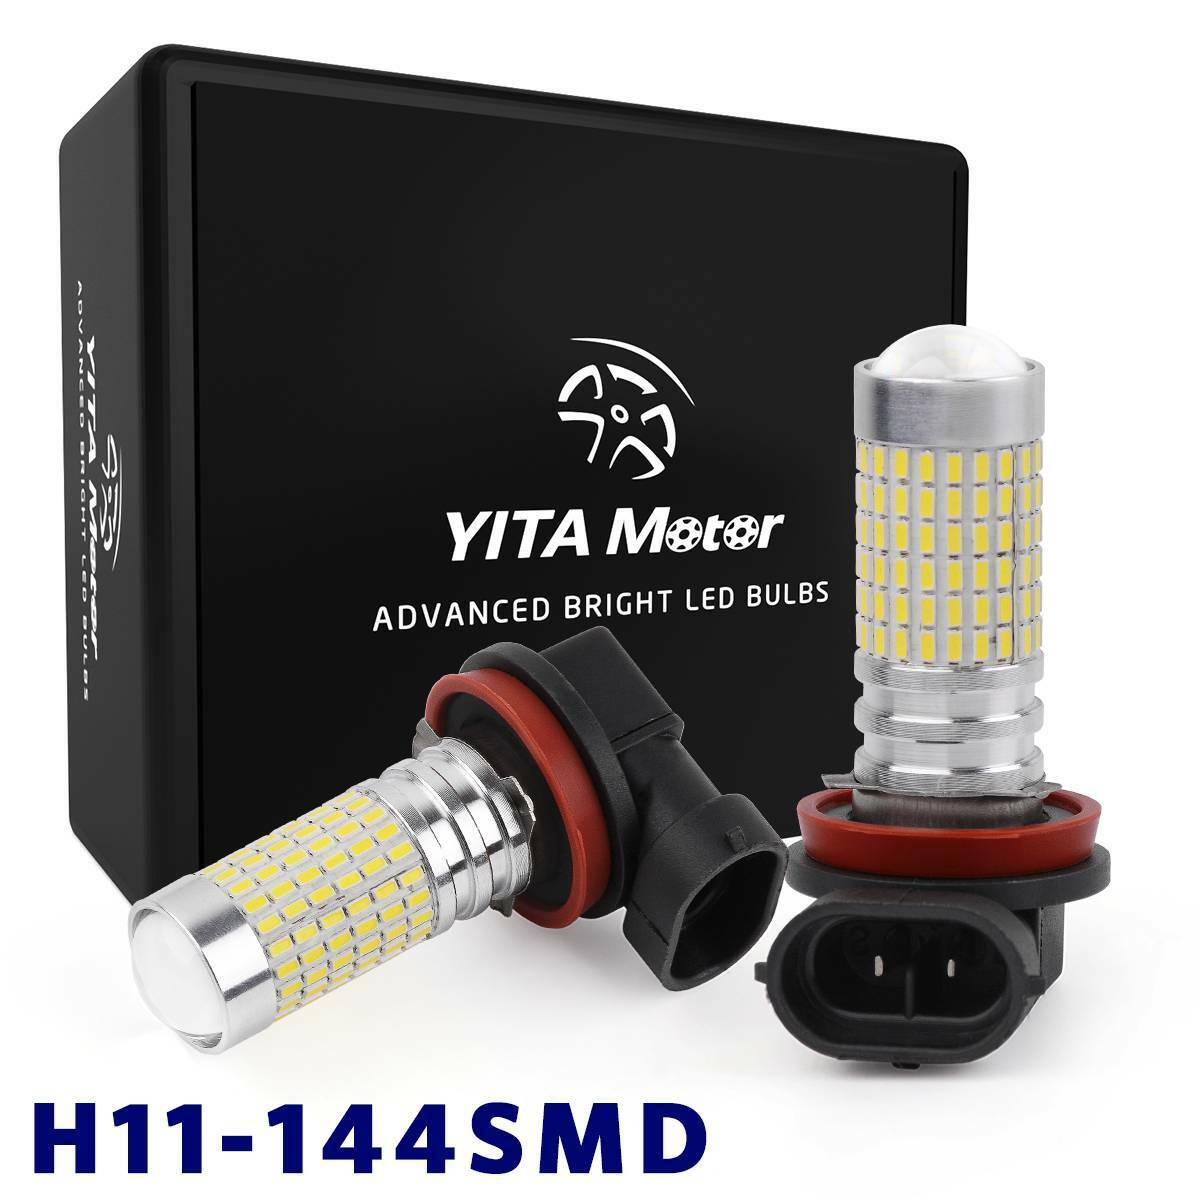 2x YITAMOTOR 6000K White LED H11 H16 Bulbs High Power 144 SMD Fog Driving Light